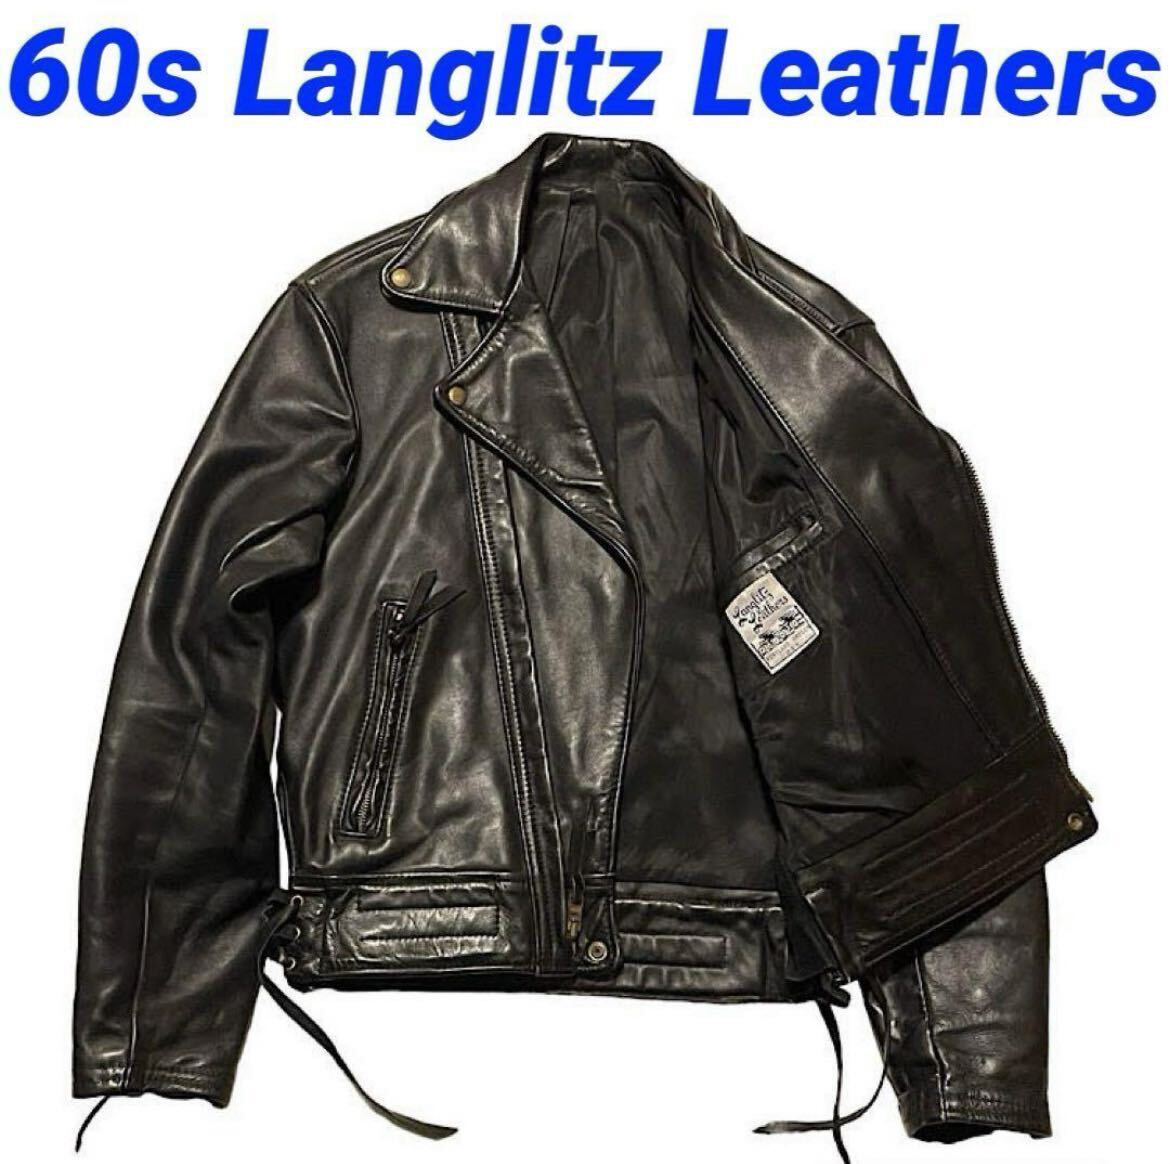 60s Vintage Langlitz Leathers rider's jacket Langlitz Leathers Riders Jacket SIZE42 race up Harley Davidson 